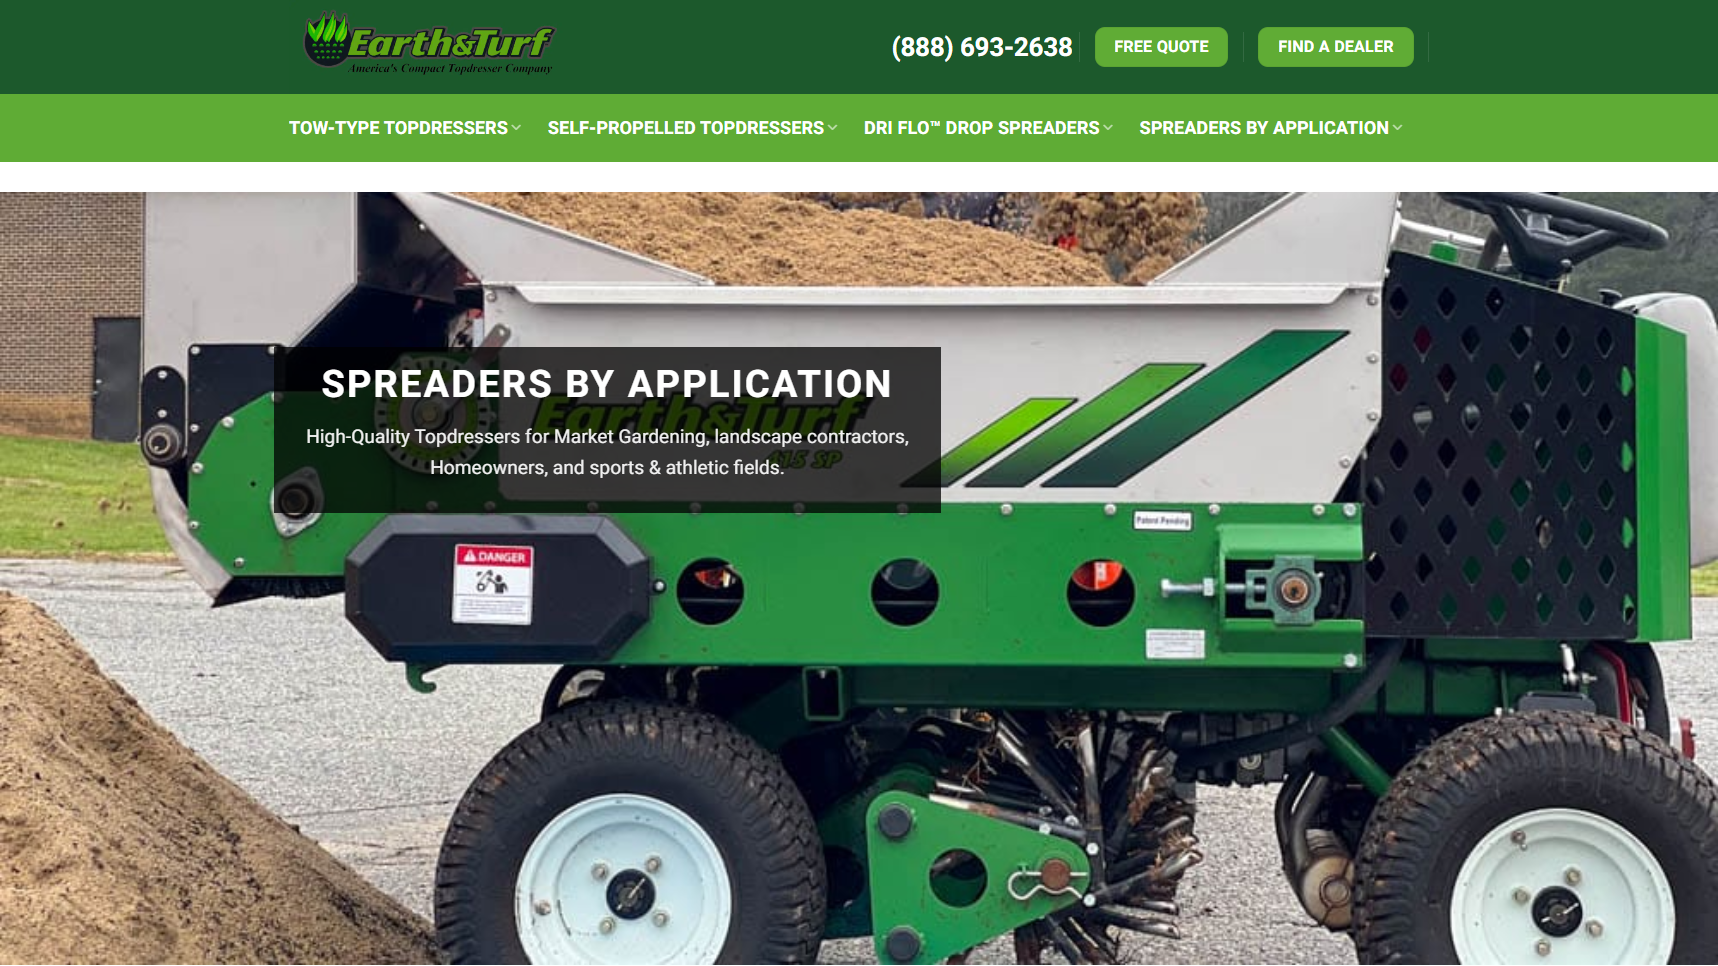 Earth & Turf - Fertilizer Spreader Manufacturer